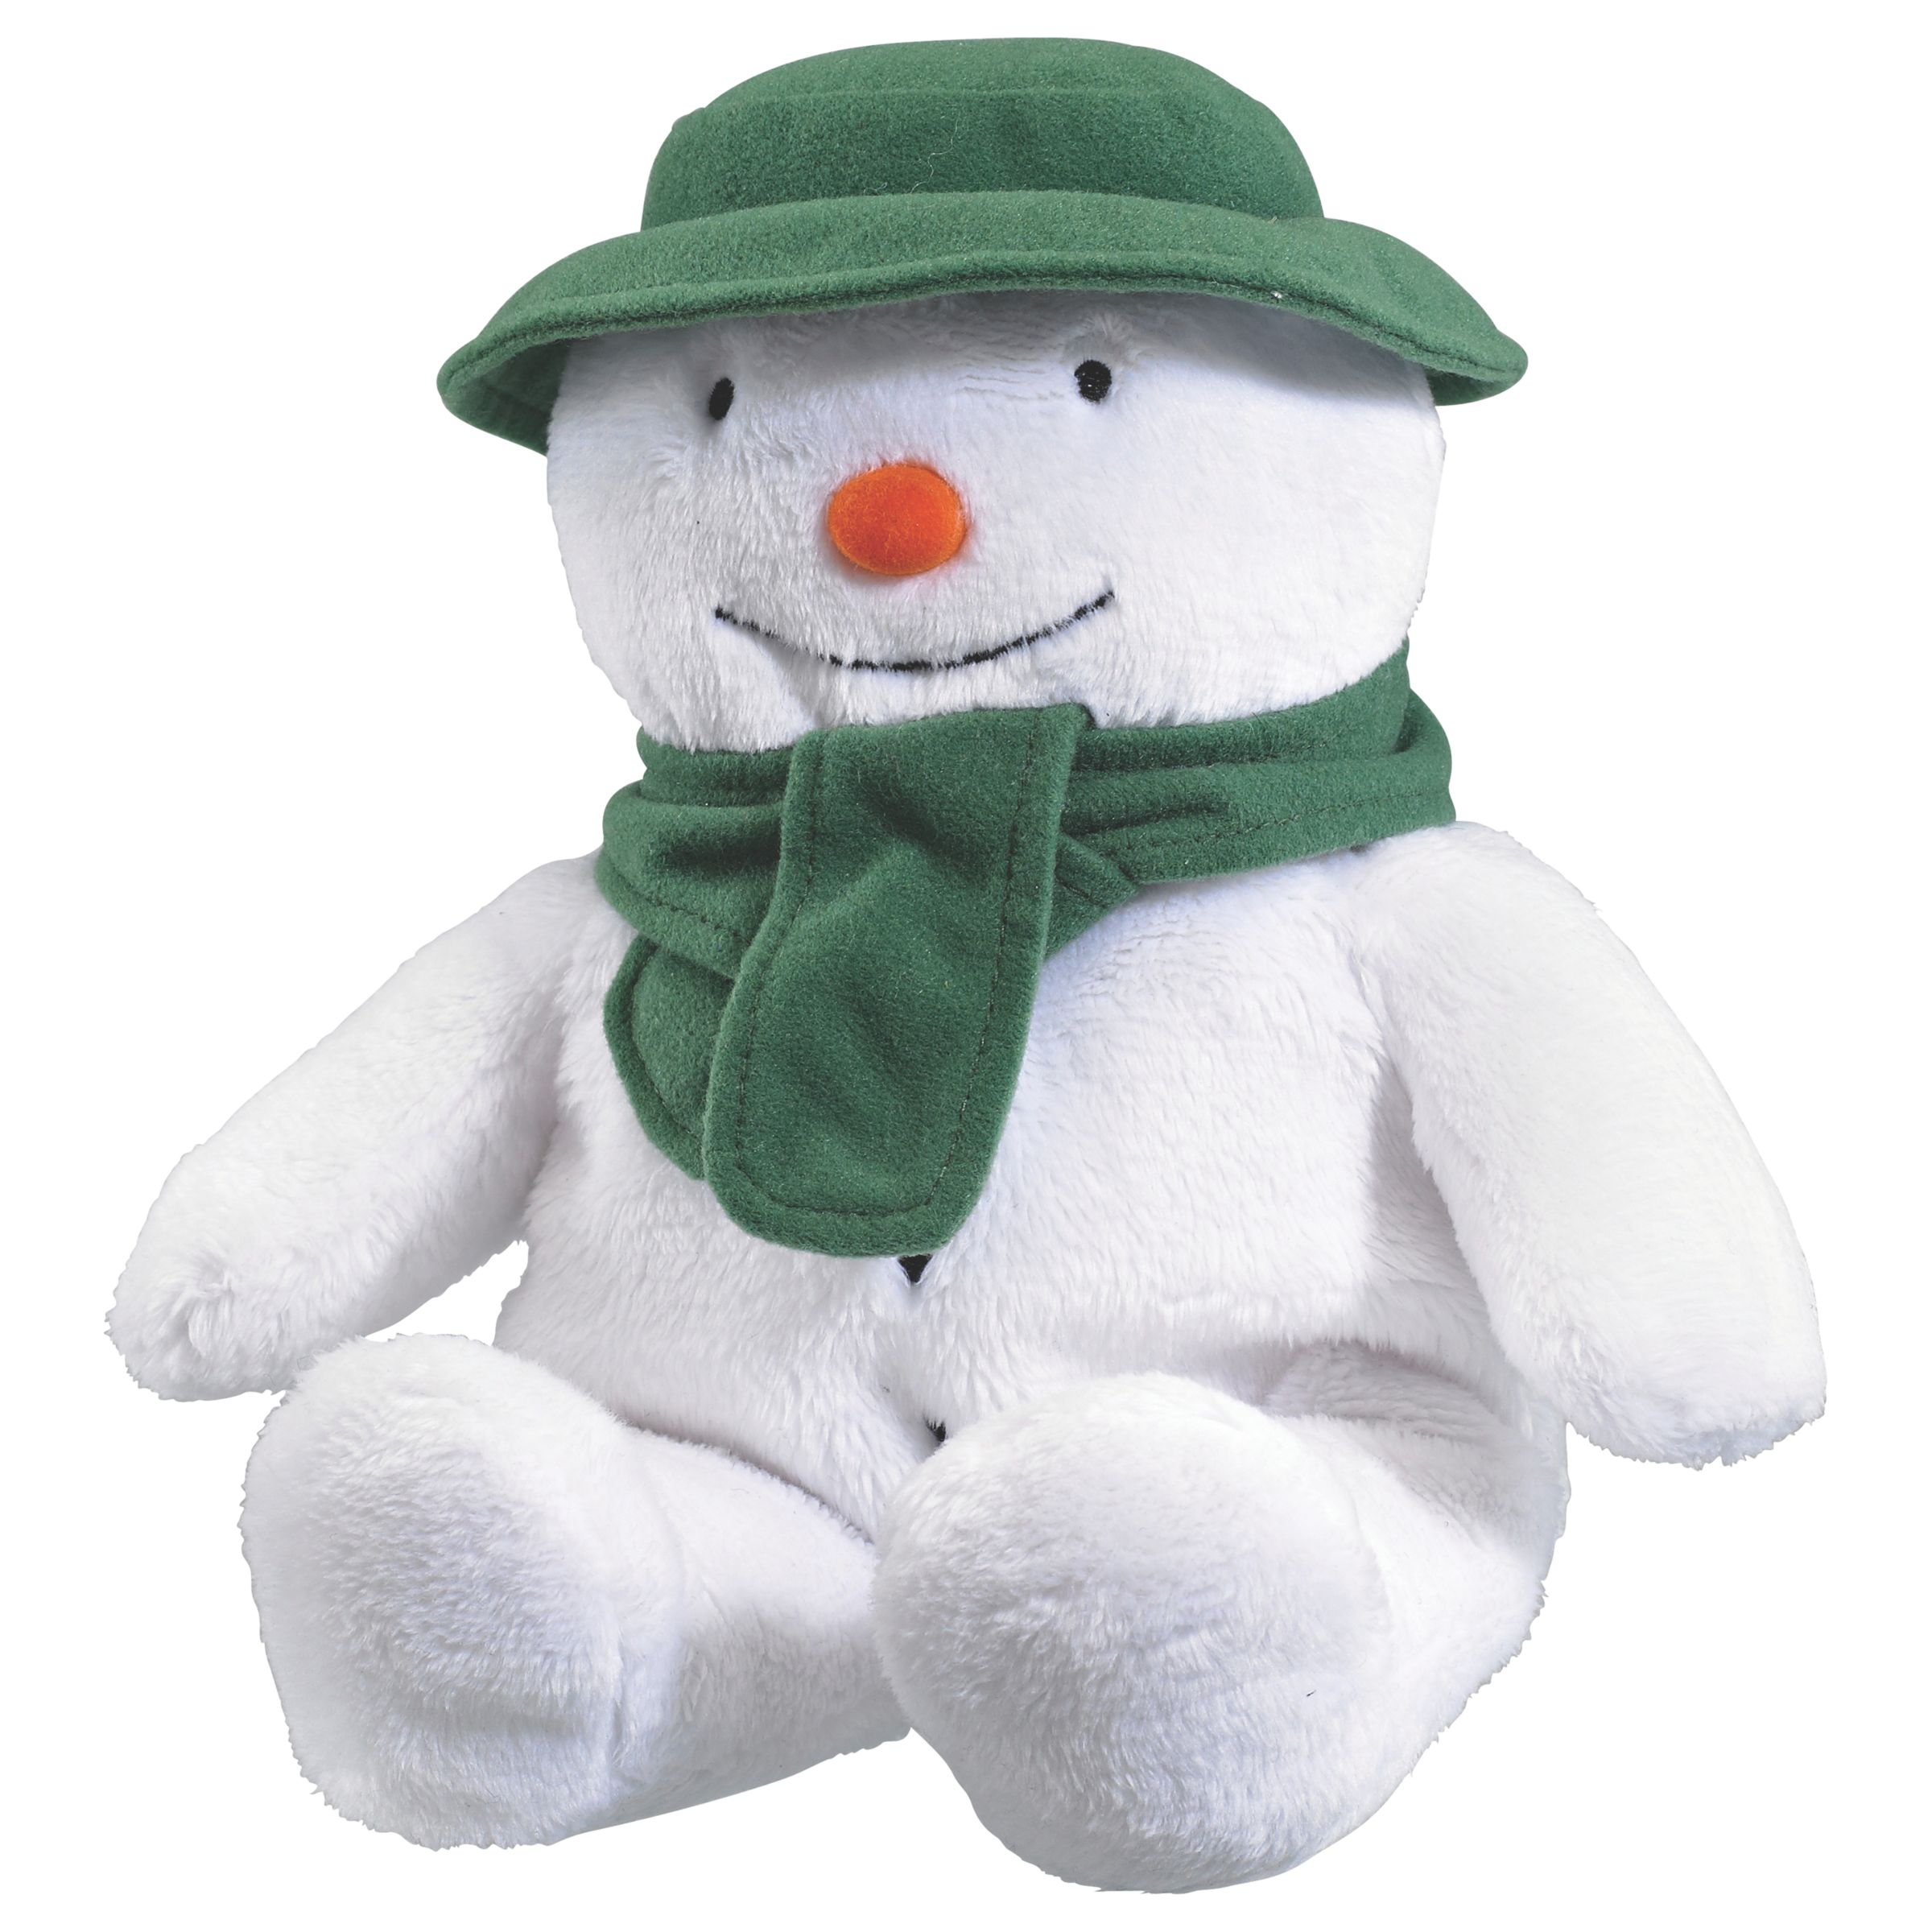 the snowman stuffed animal